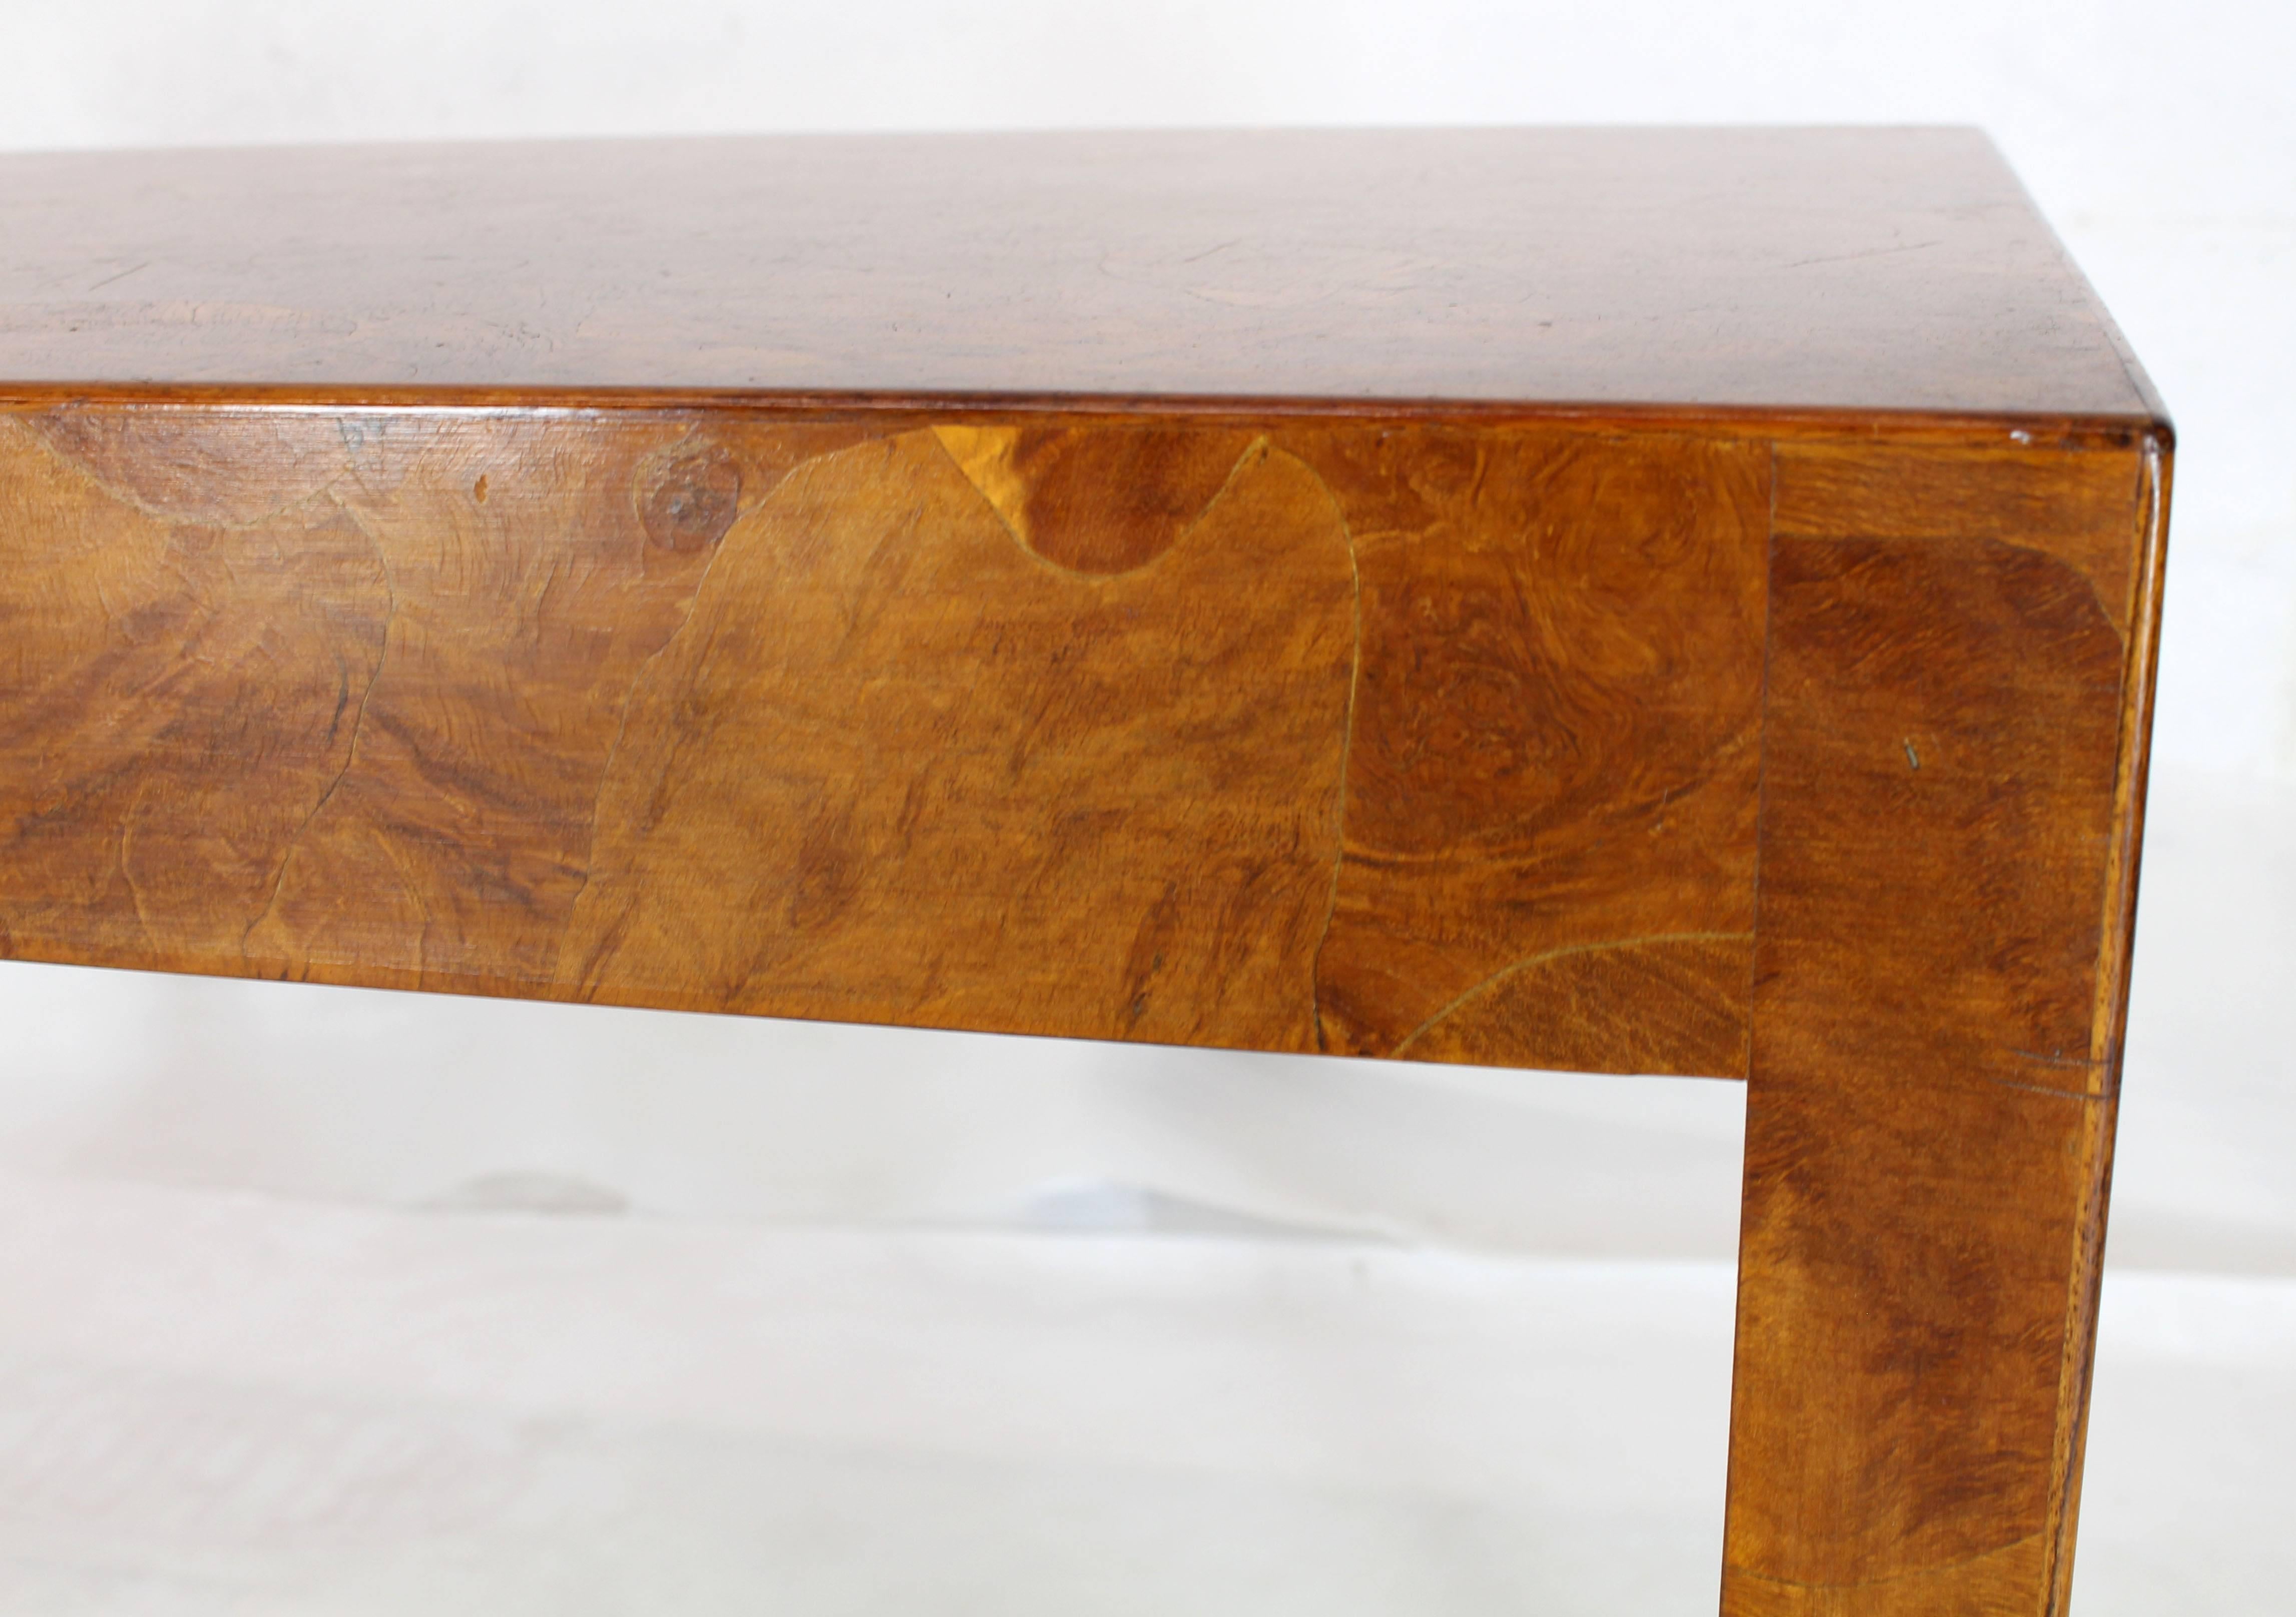 Midcentury Italian modern burl wood batch veneer work rectangle console sofa table.